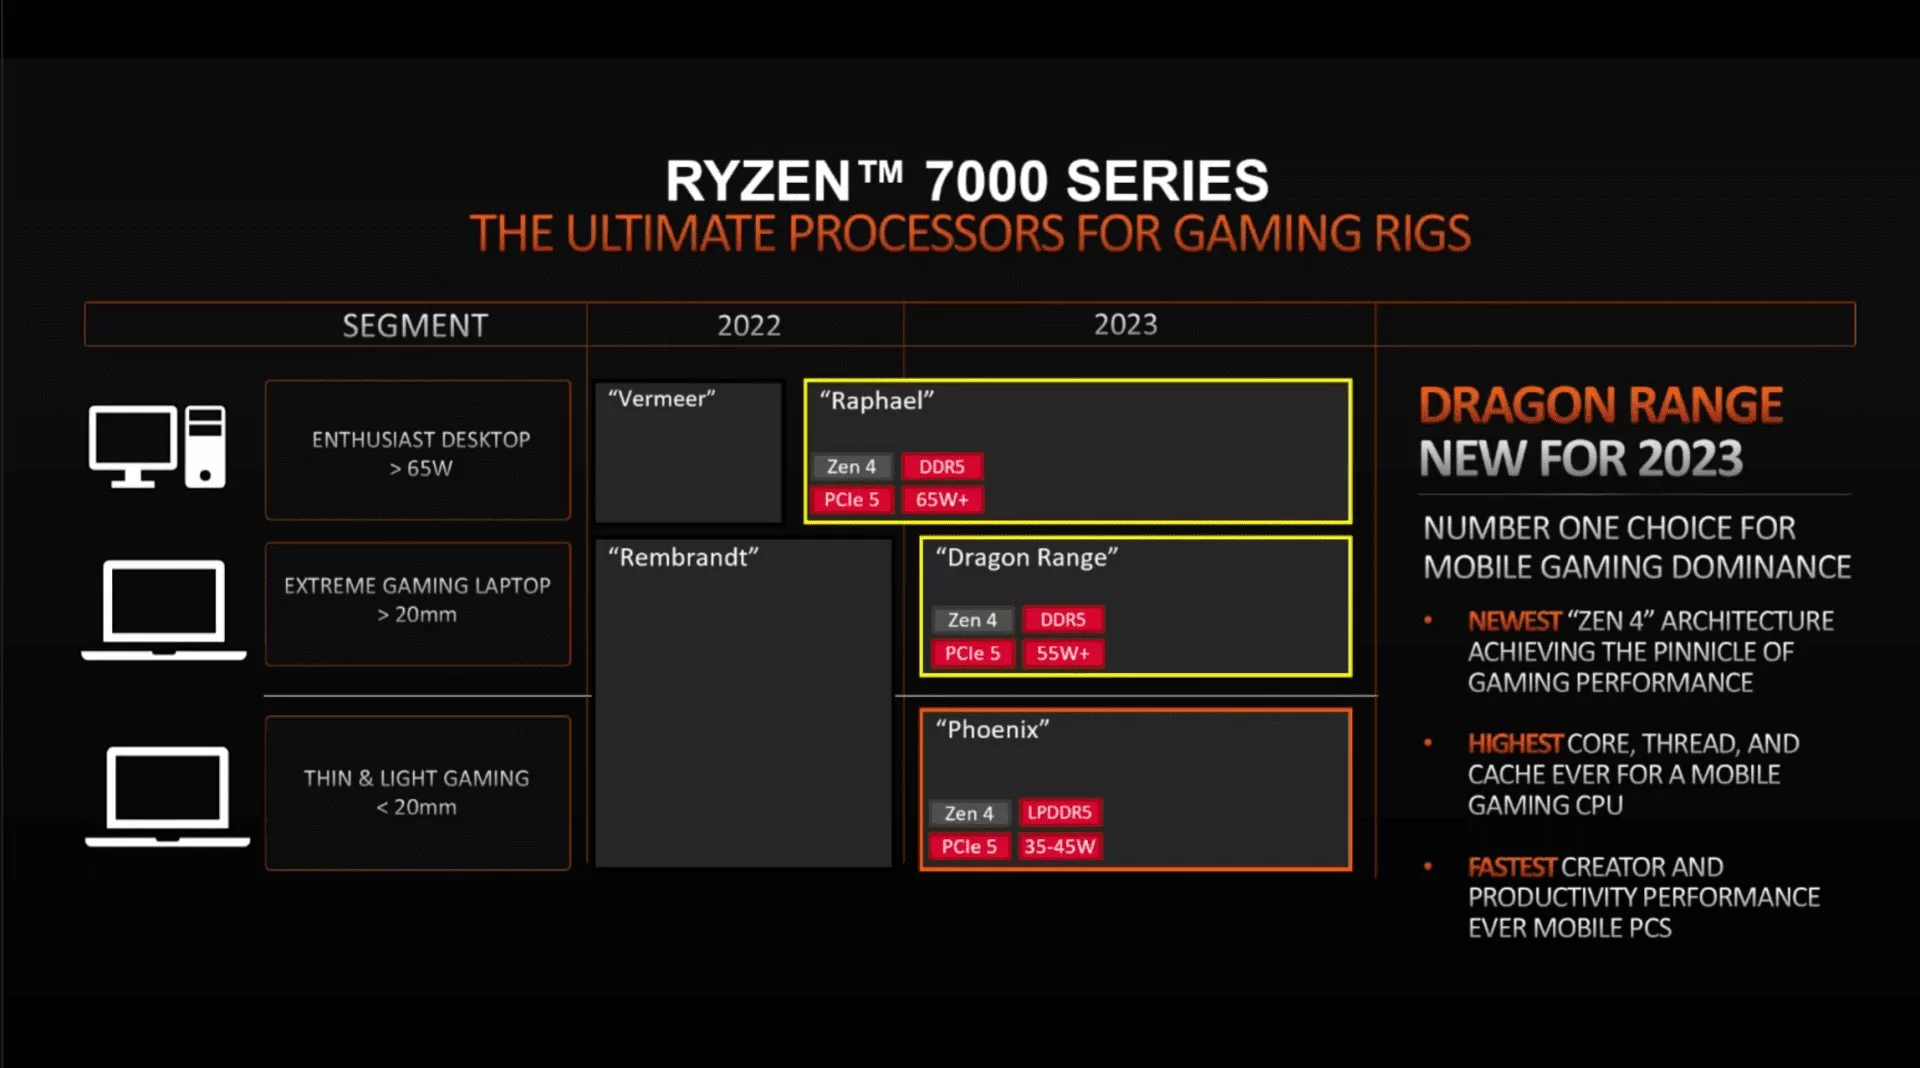 Fpl TCjXEAIh5 q | AMD | AMD ดาวน์เกรด Ryzen 7040 ซีรีส์ ลดสเปกทุกรุ่นและตัดบางฟีเจอร์ทิ้ง